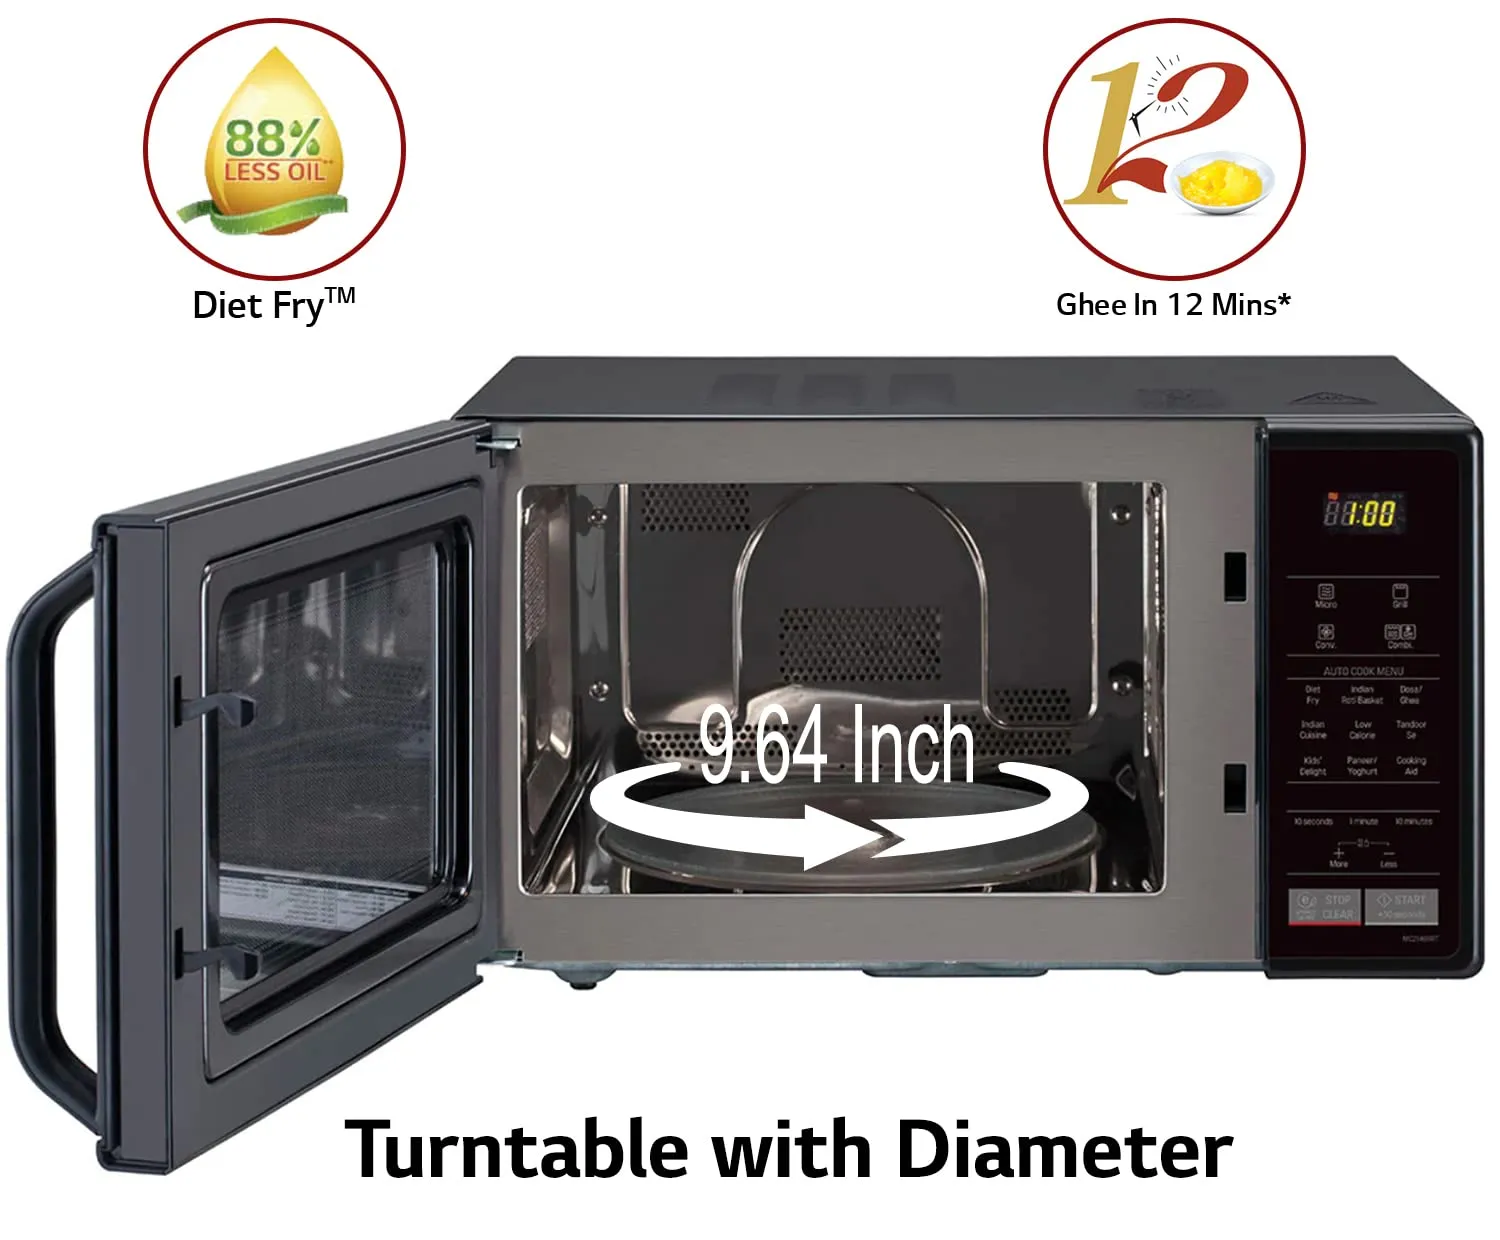 LG 21 L Diet Fry Convection Microwave Oven (MC2146BRT, Black)